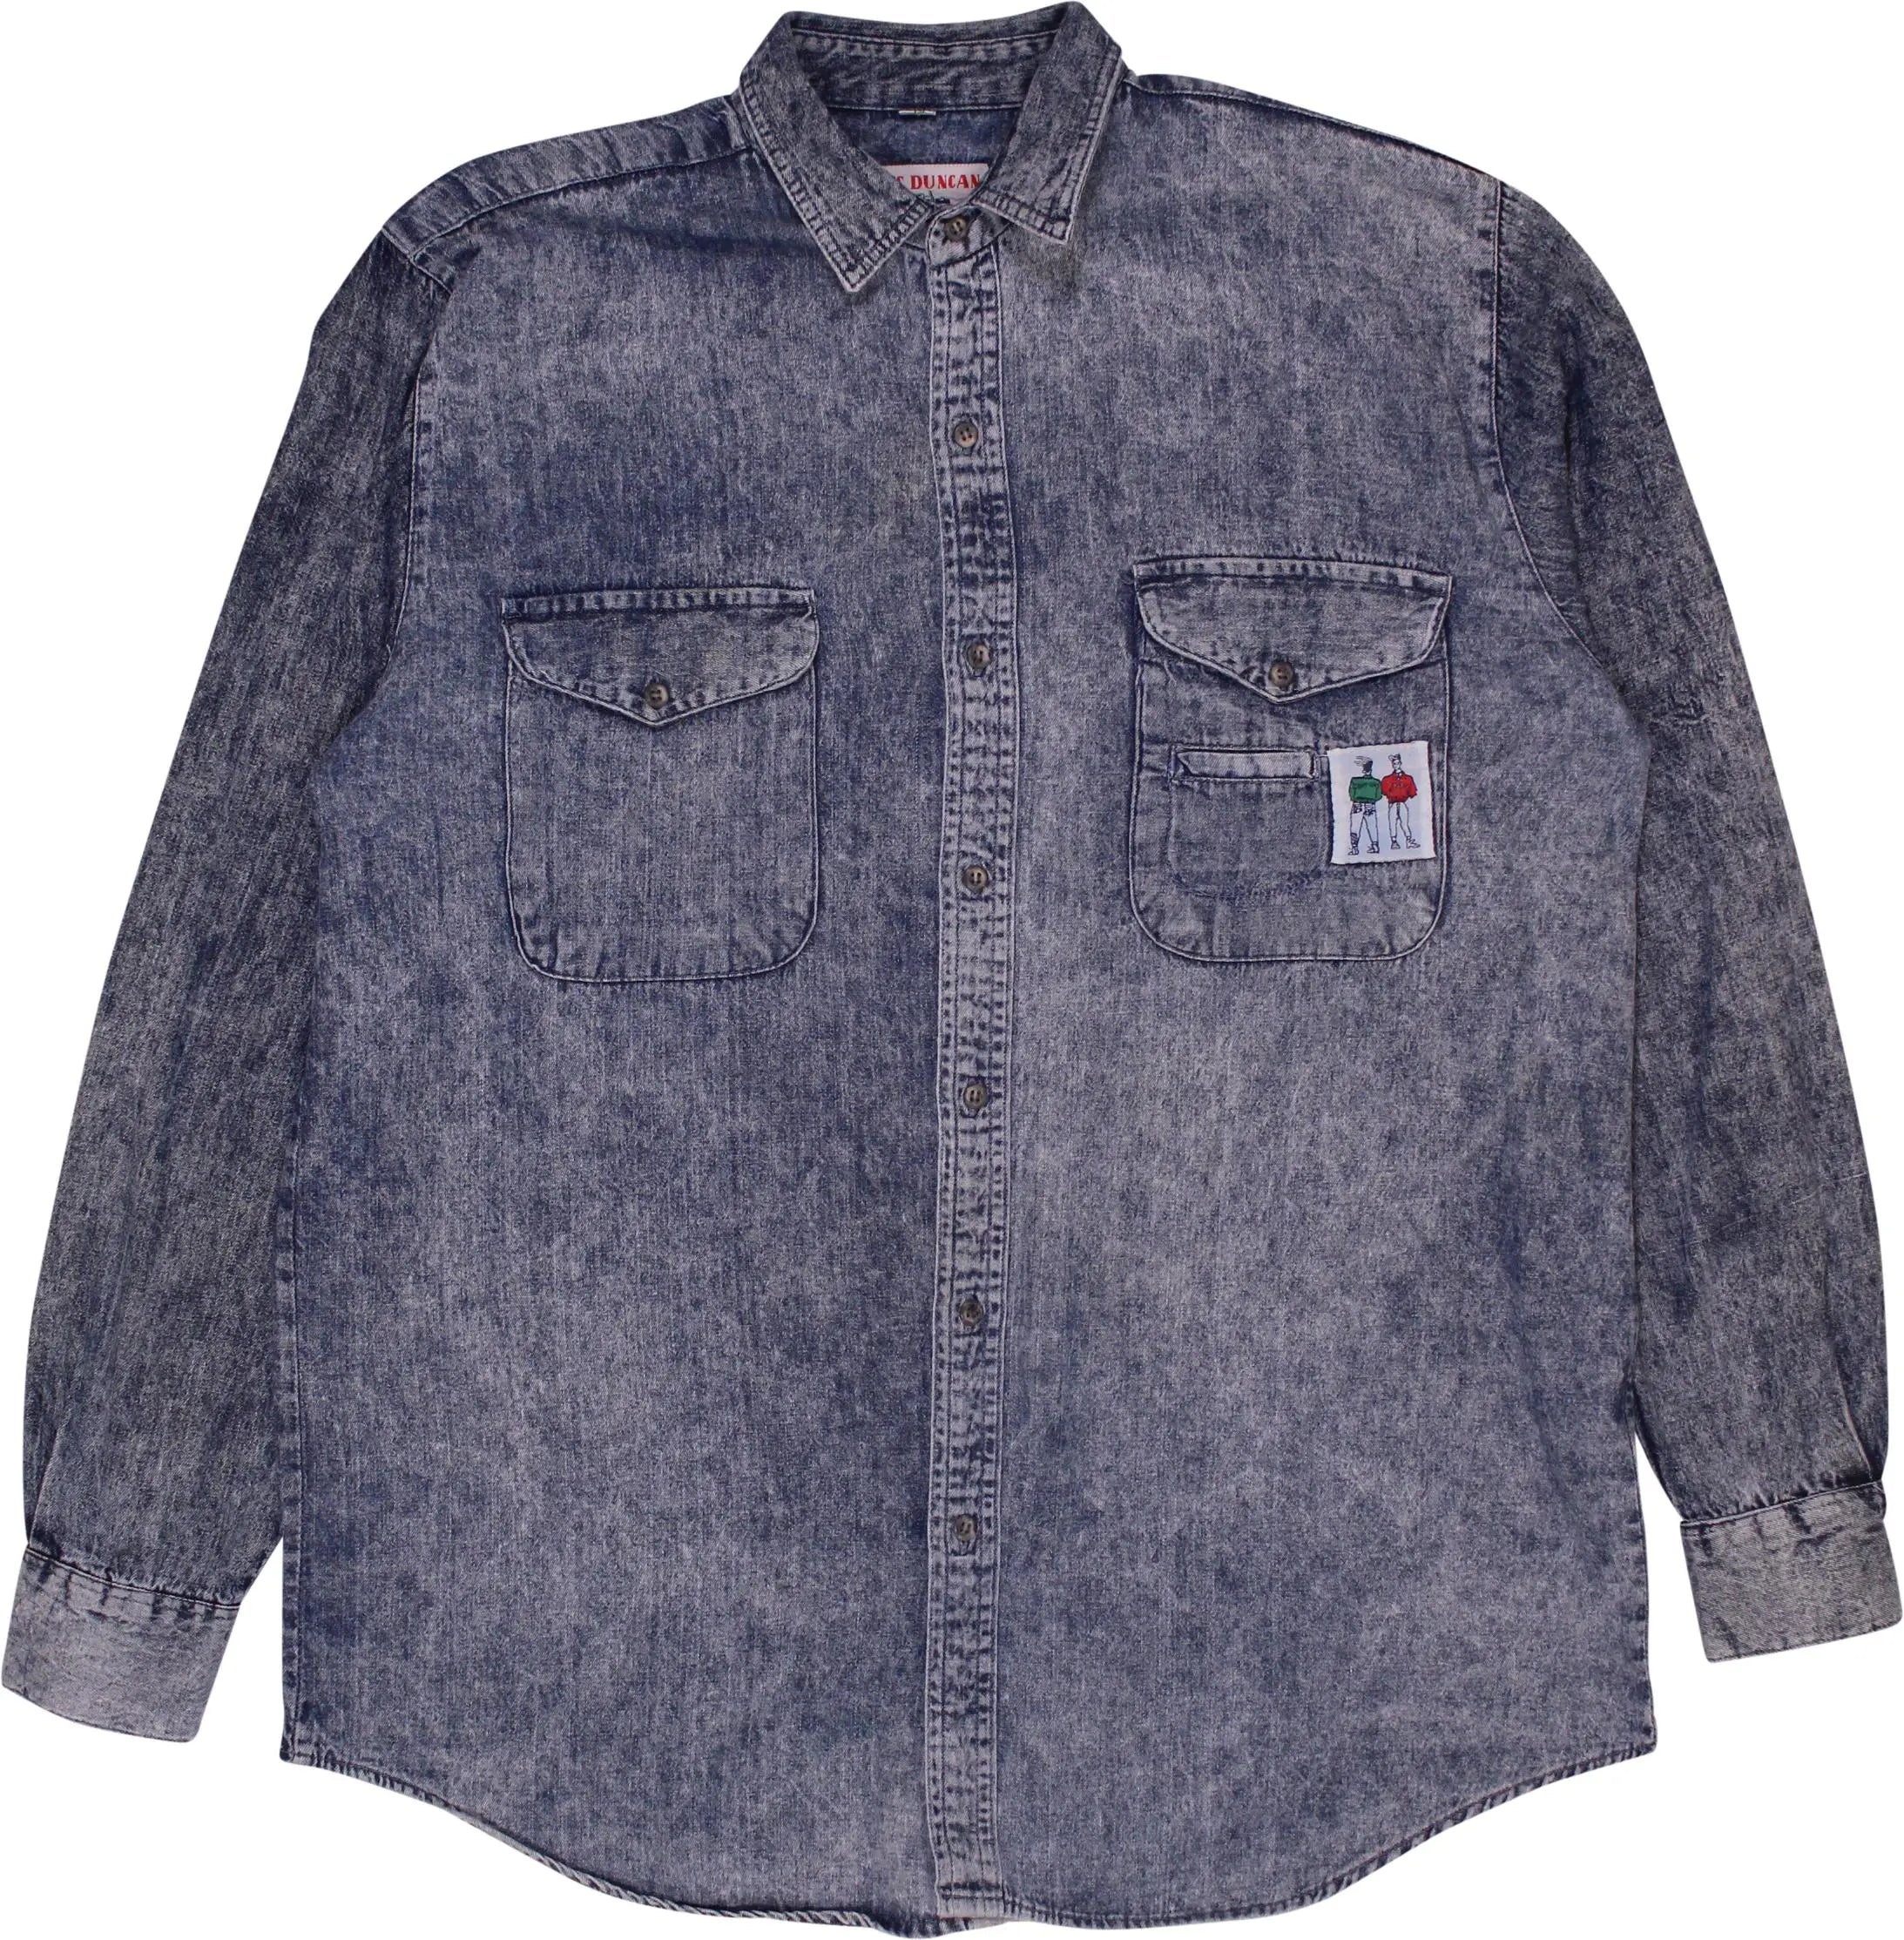 Mc Duncan - 80s Acid Wash Denim Shirt- ThriftTale.com - Vintage and second handclothing